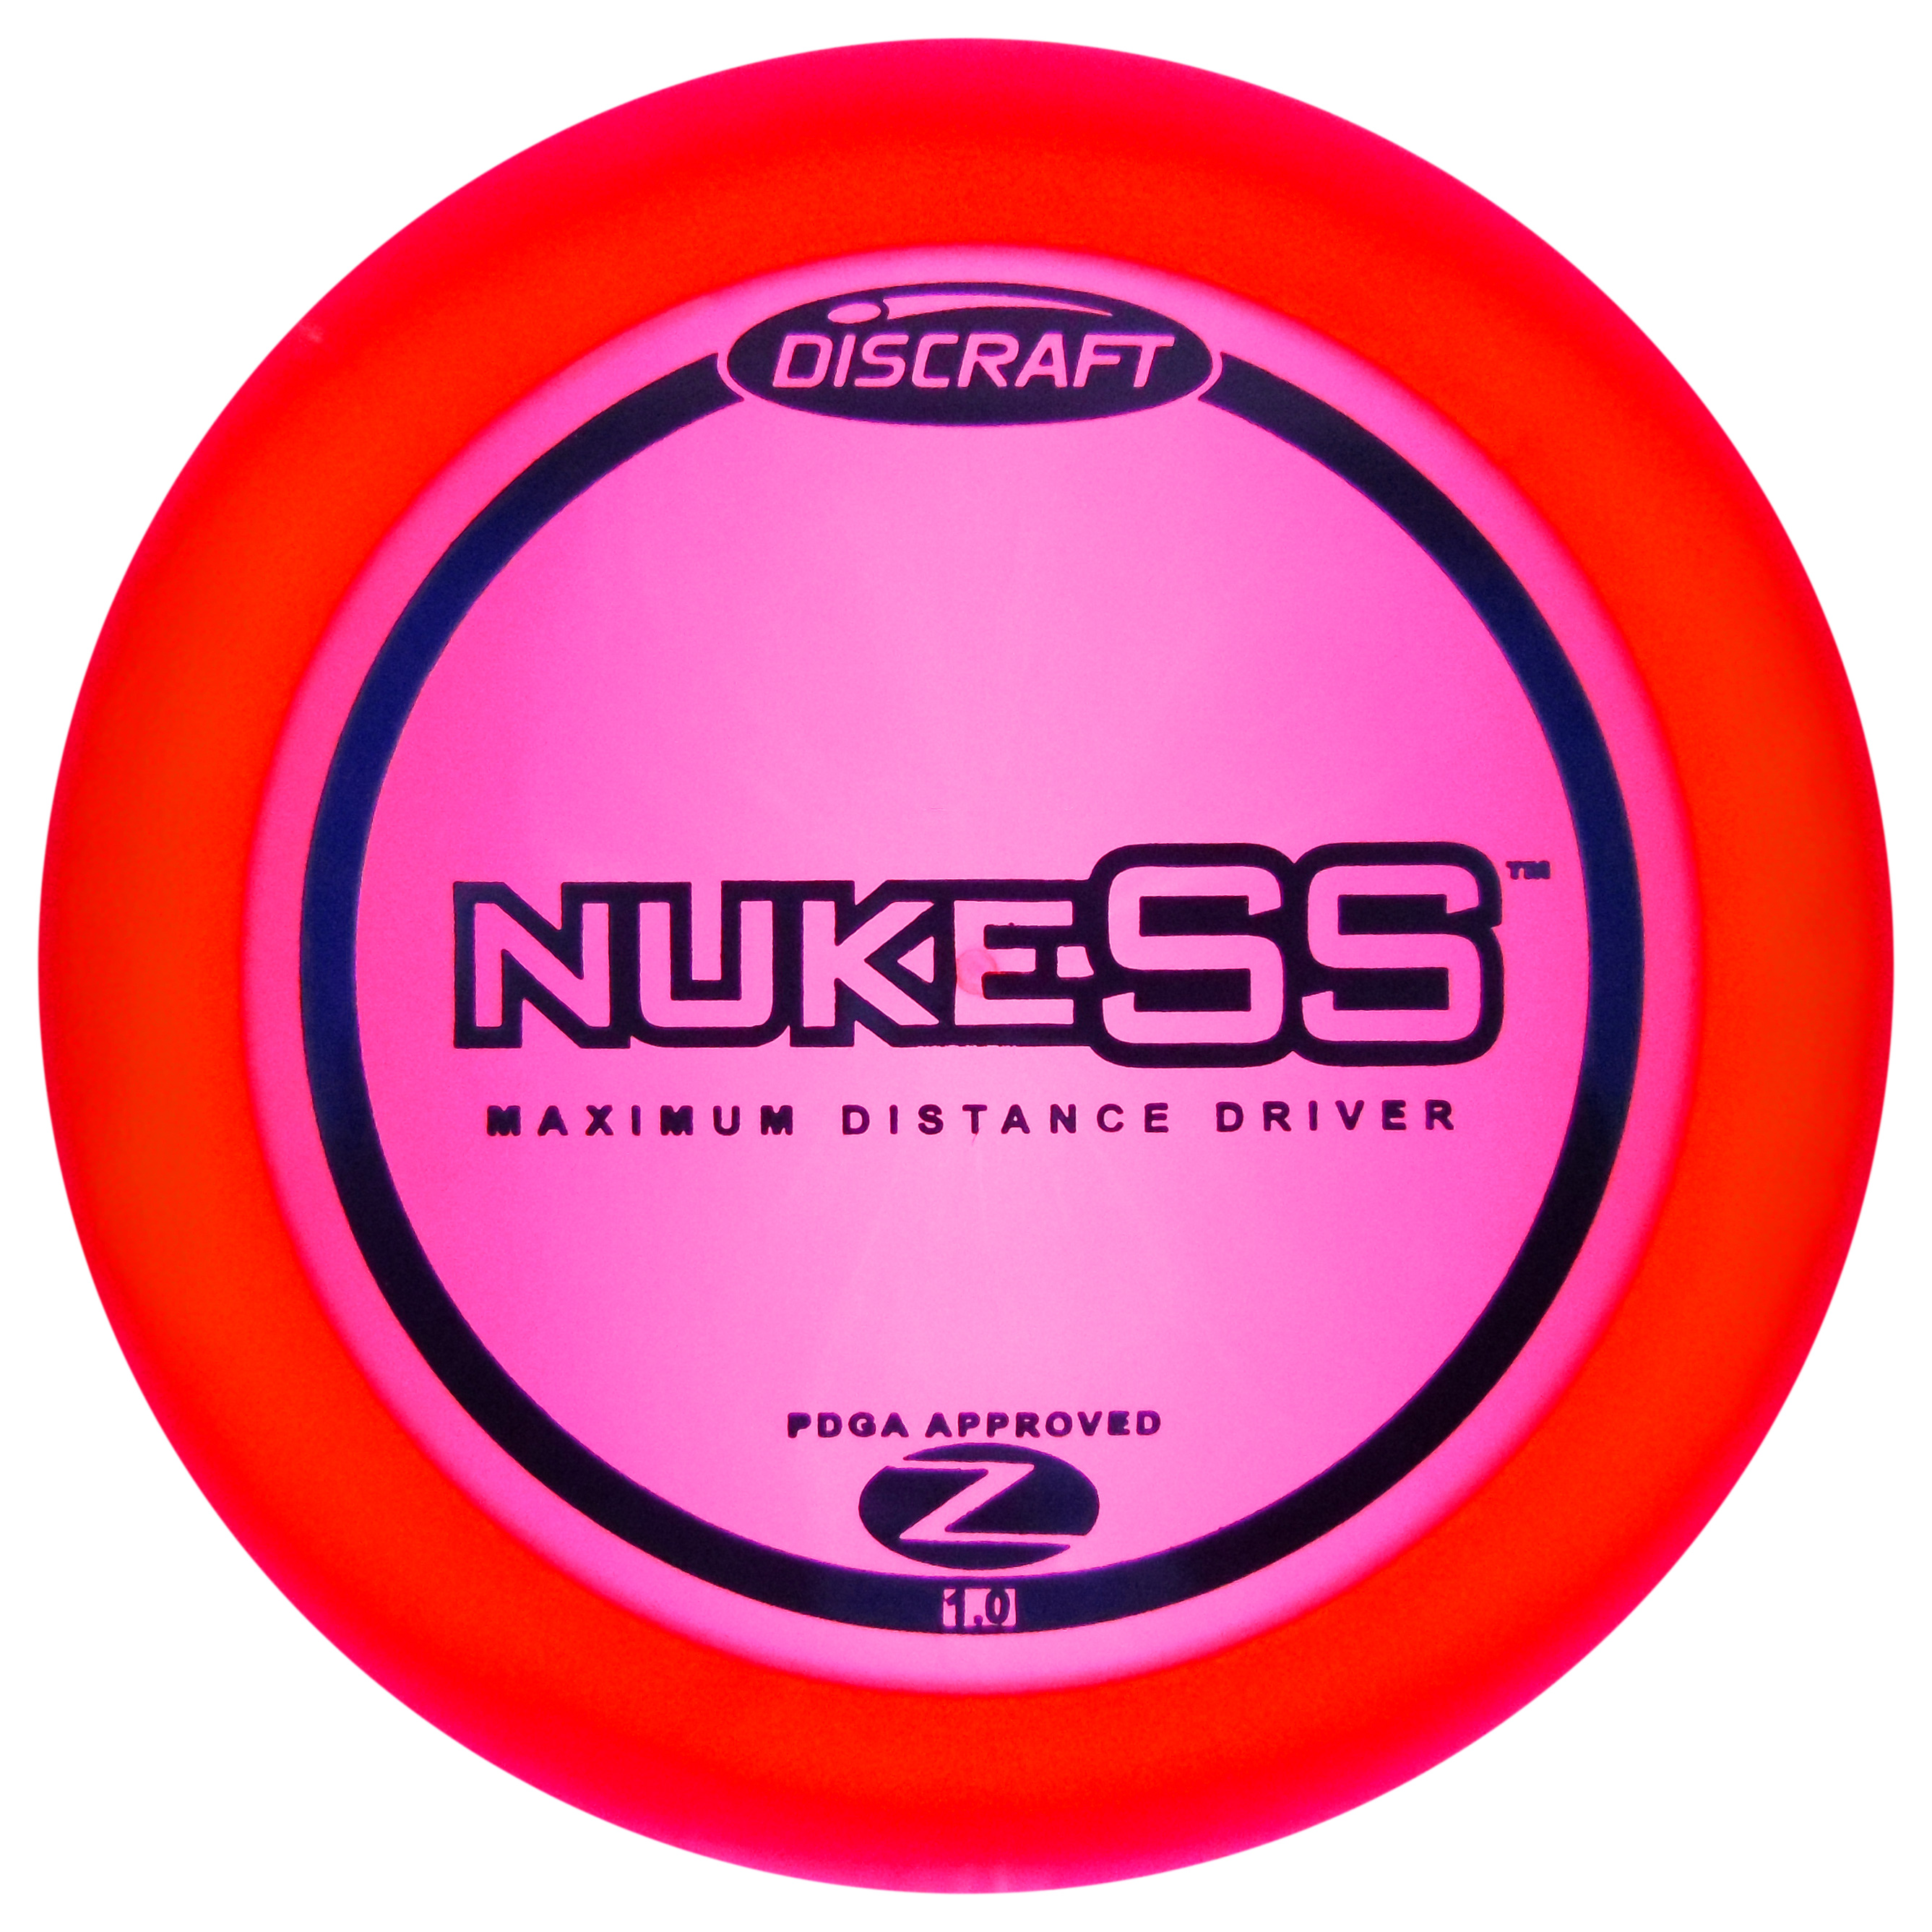 Discraft's Z Nuke SS